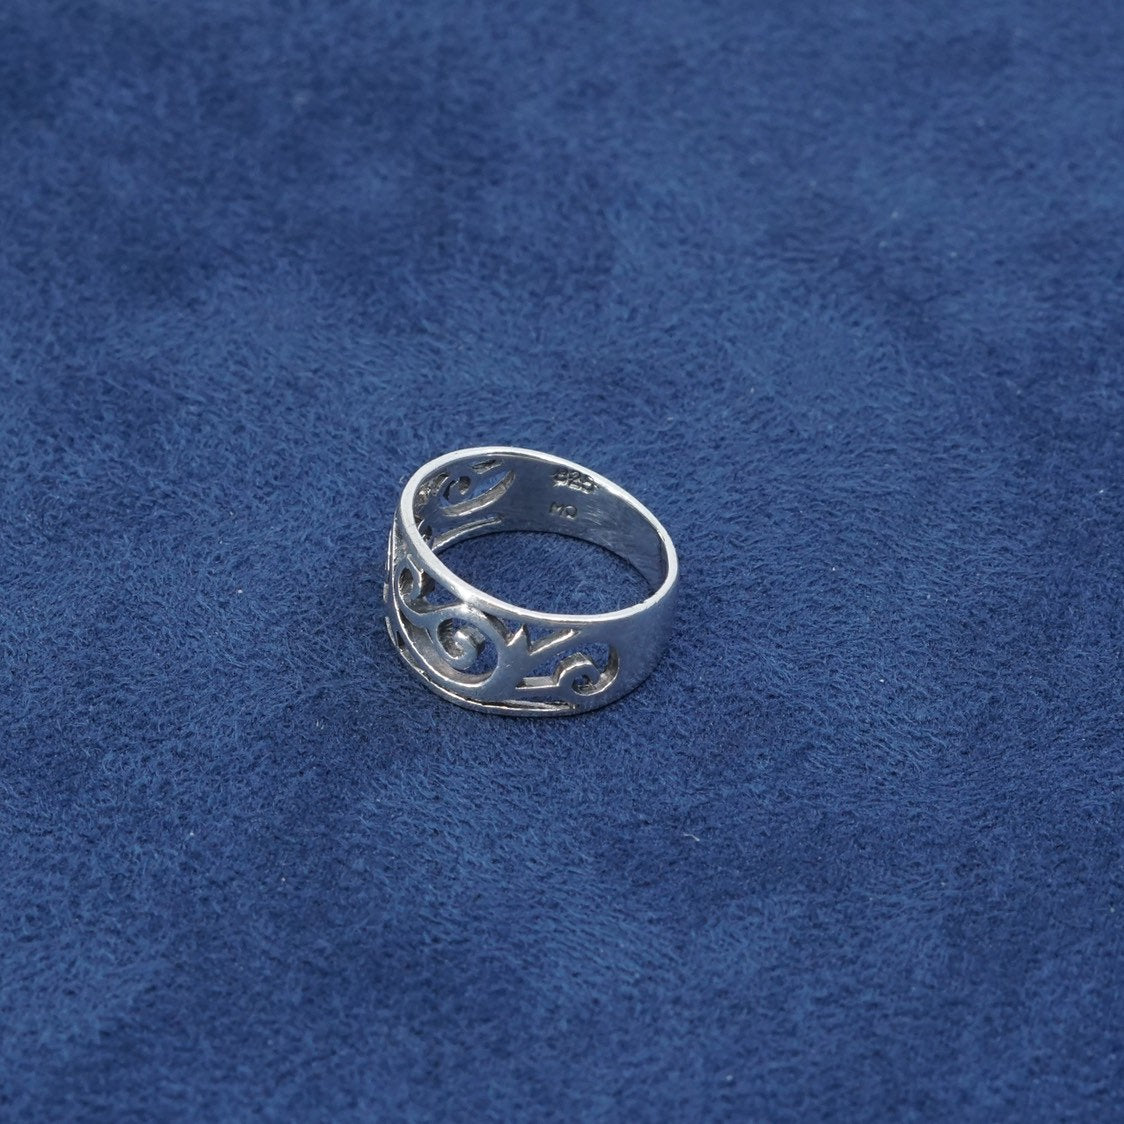 Size 5, vtg sterling silver handmade ring, 925 filigree whirl band